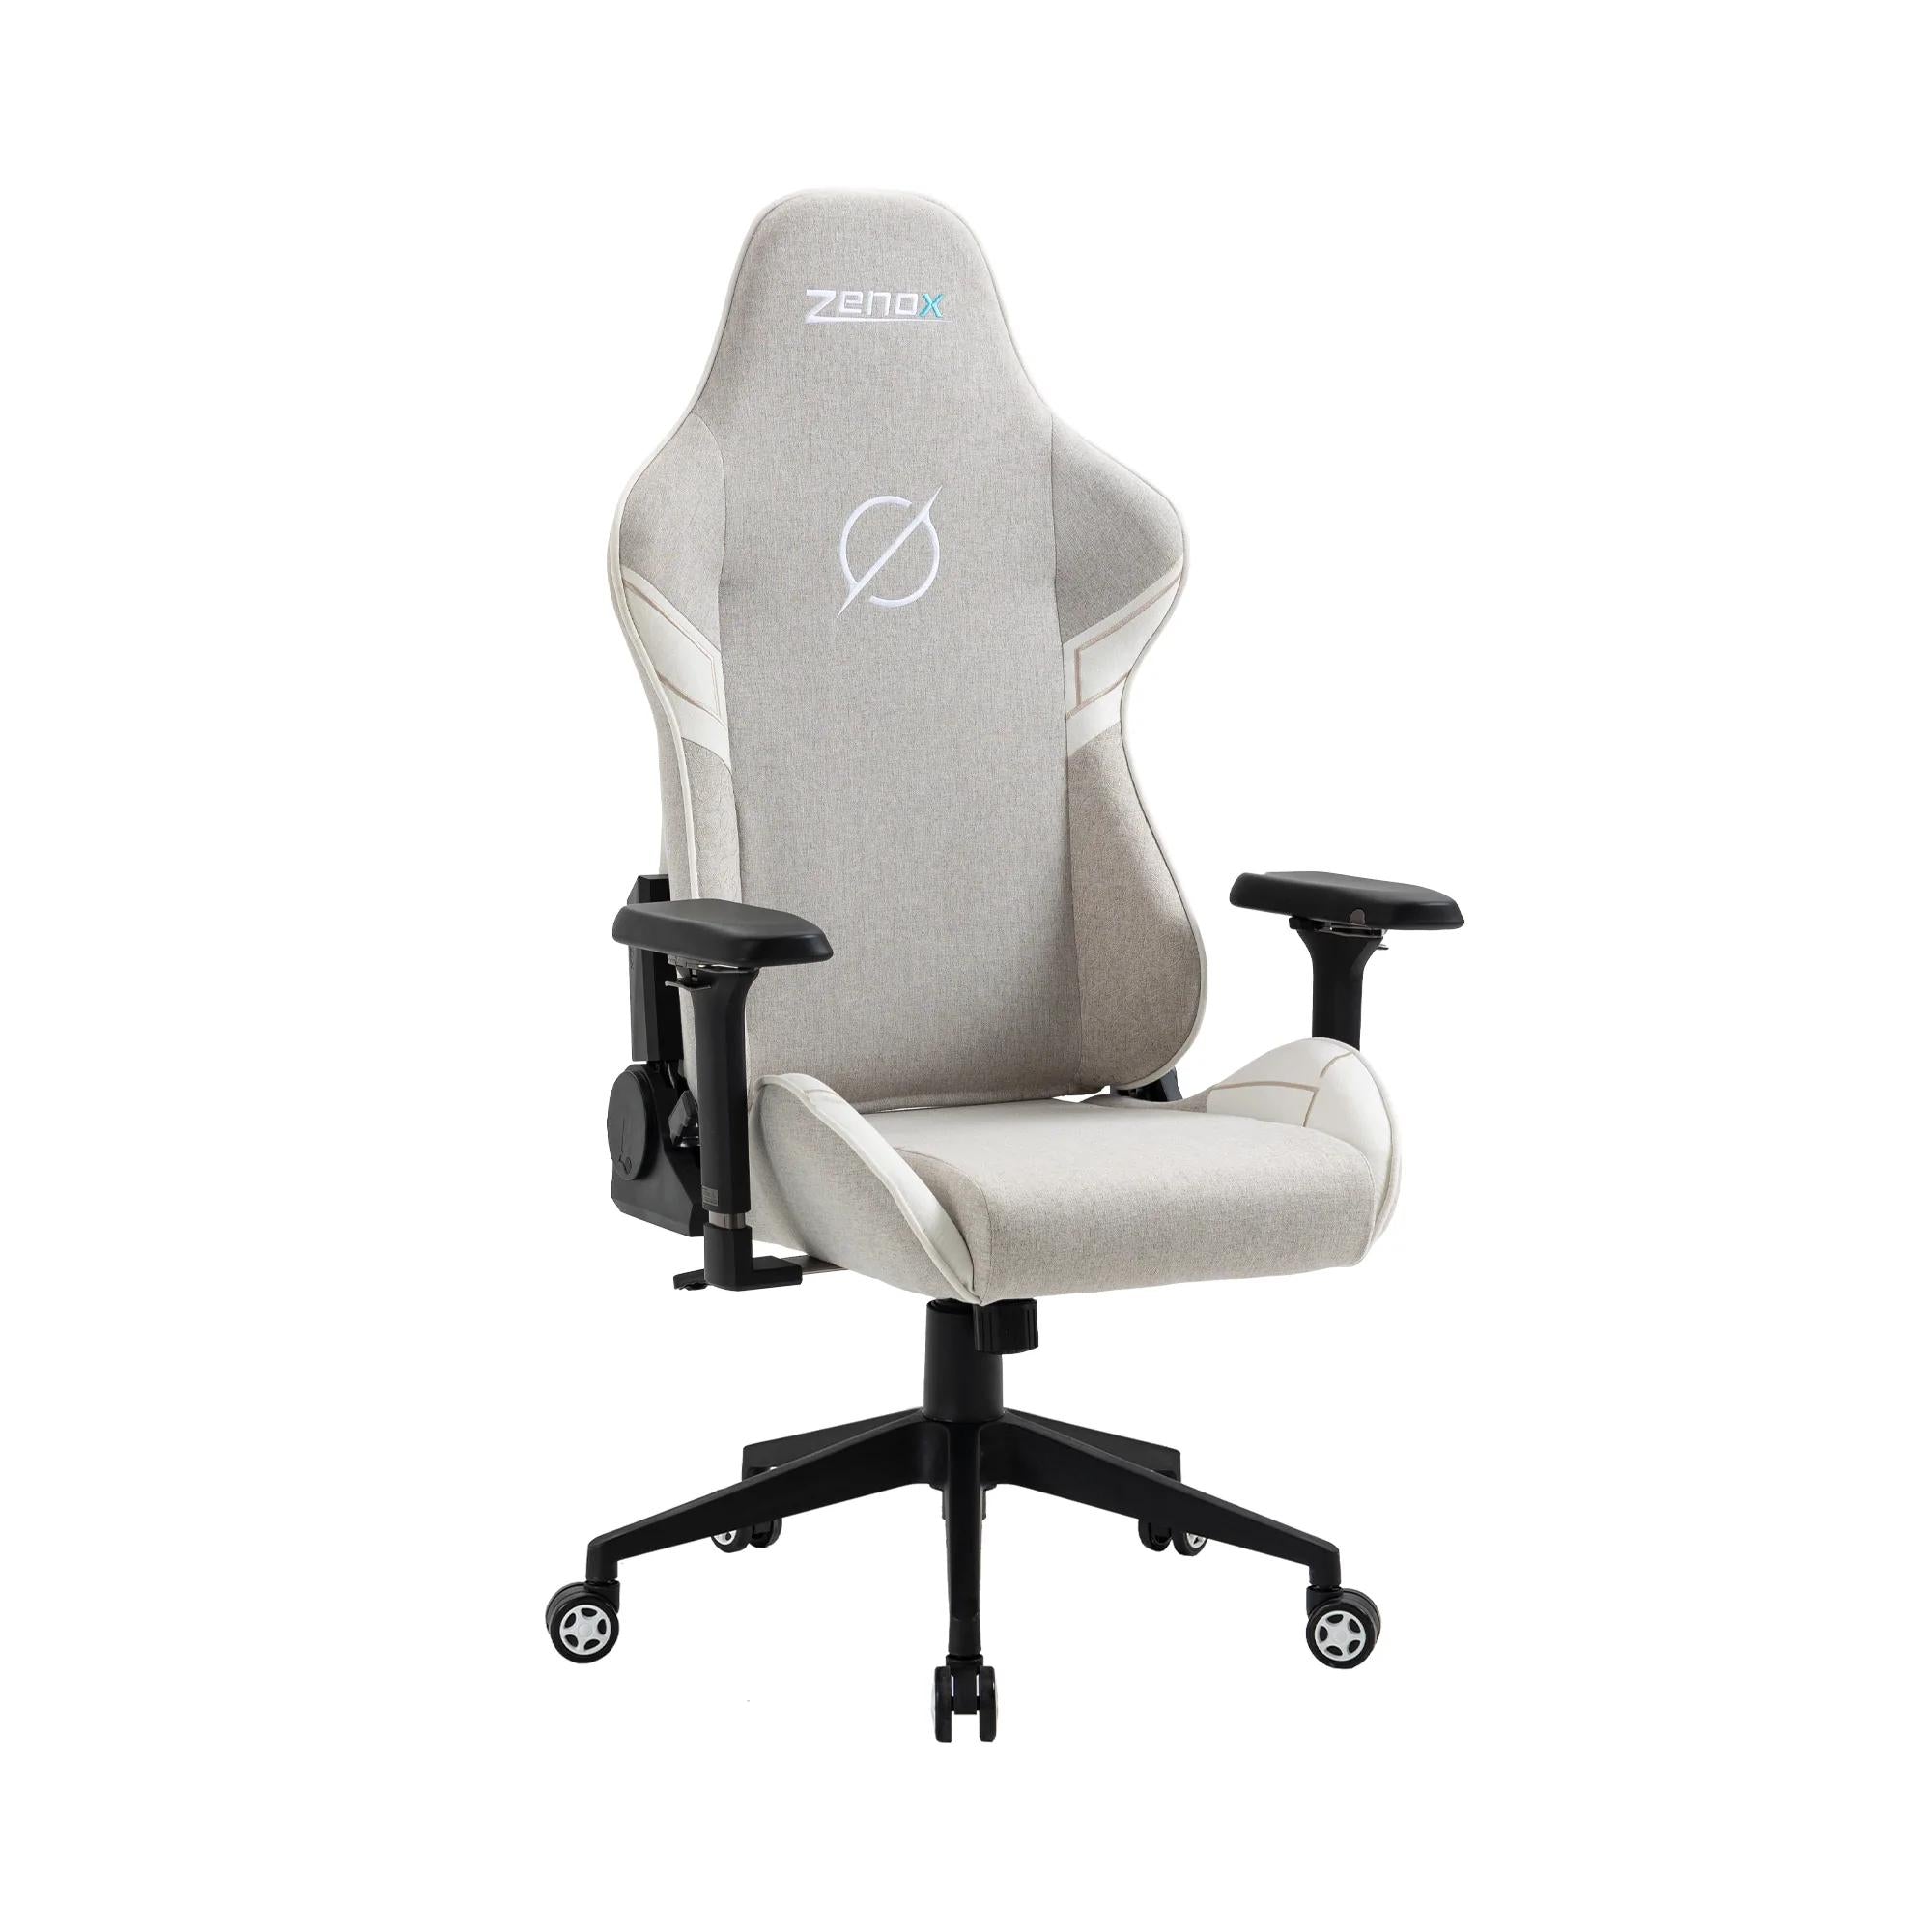 Zenox Saturn-MK2 Gaming Chair (Fabric/Light Grey)